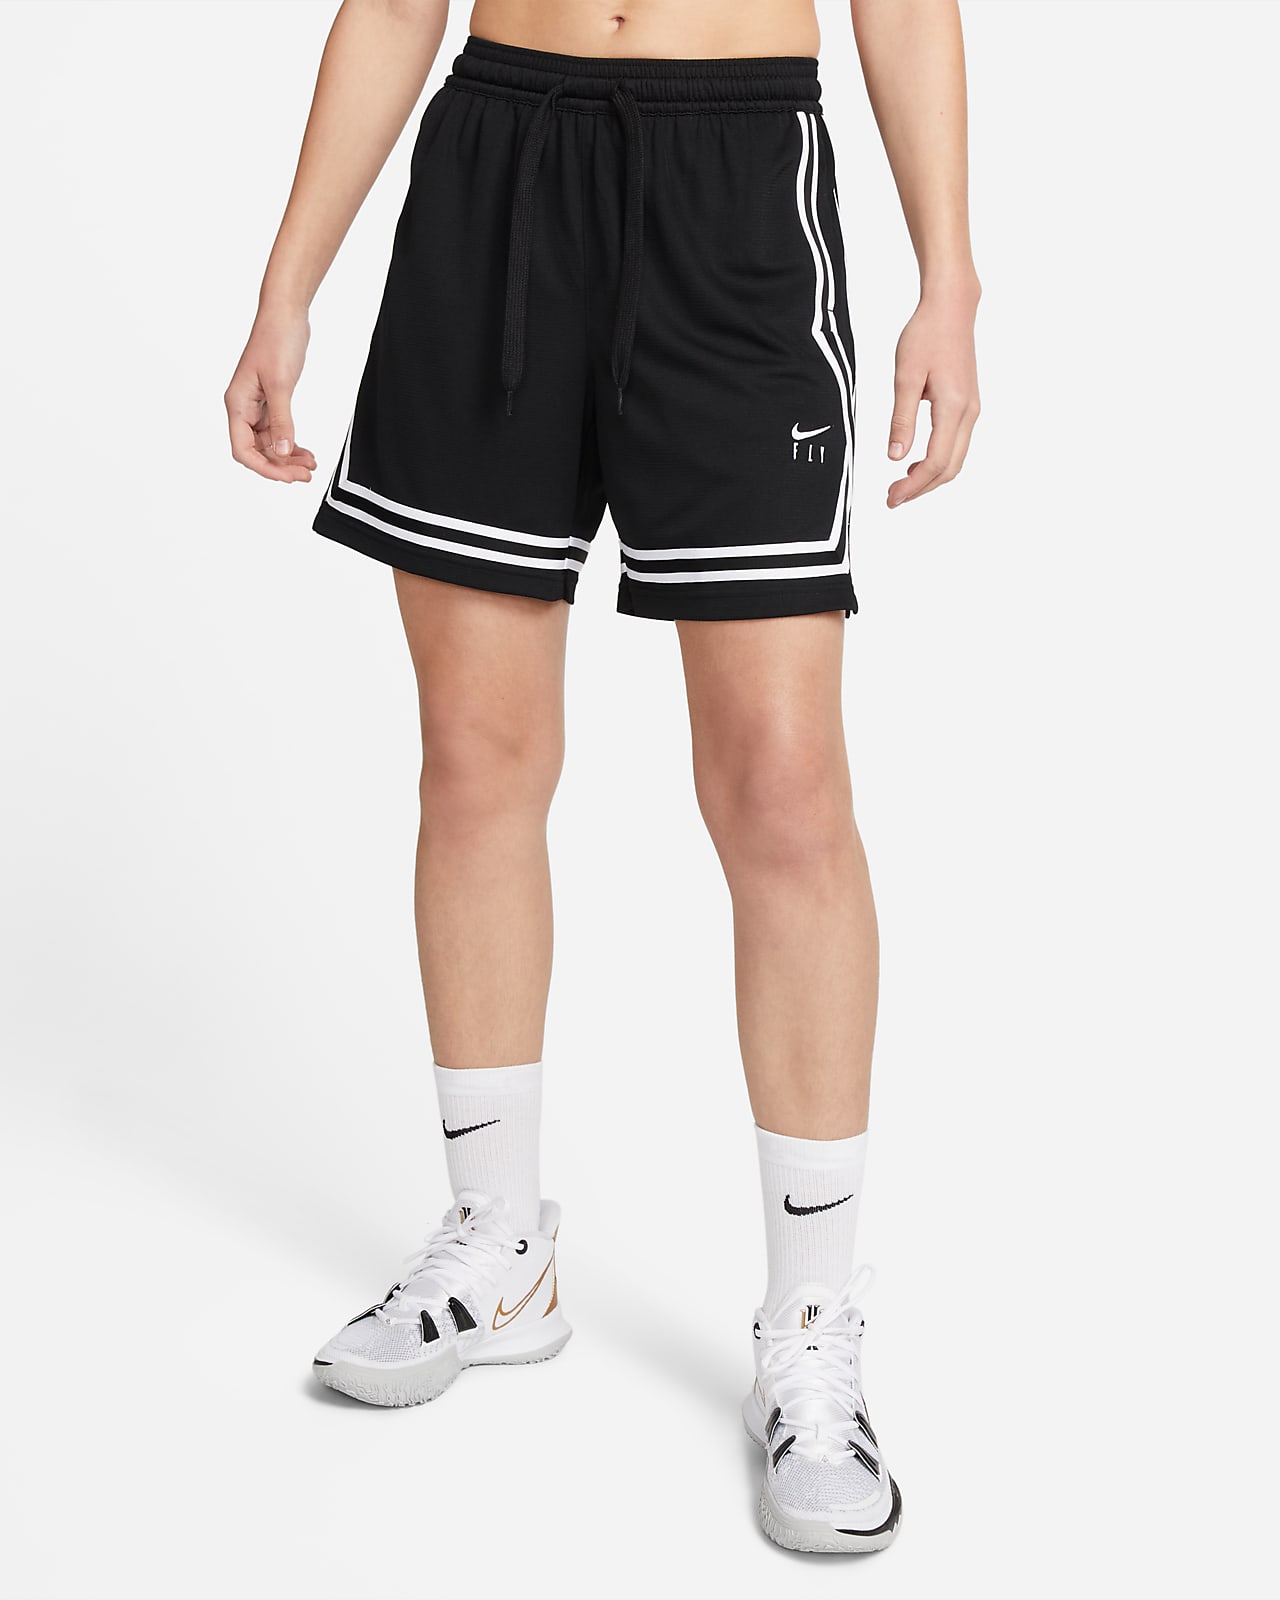 Shorts de básquetbol para mujer Nike Fly Crossover. Nike MX